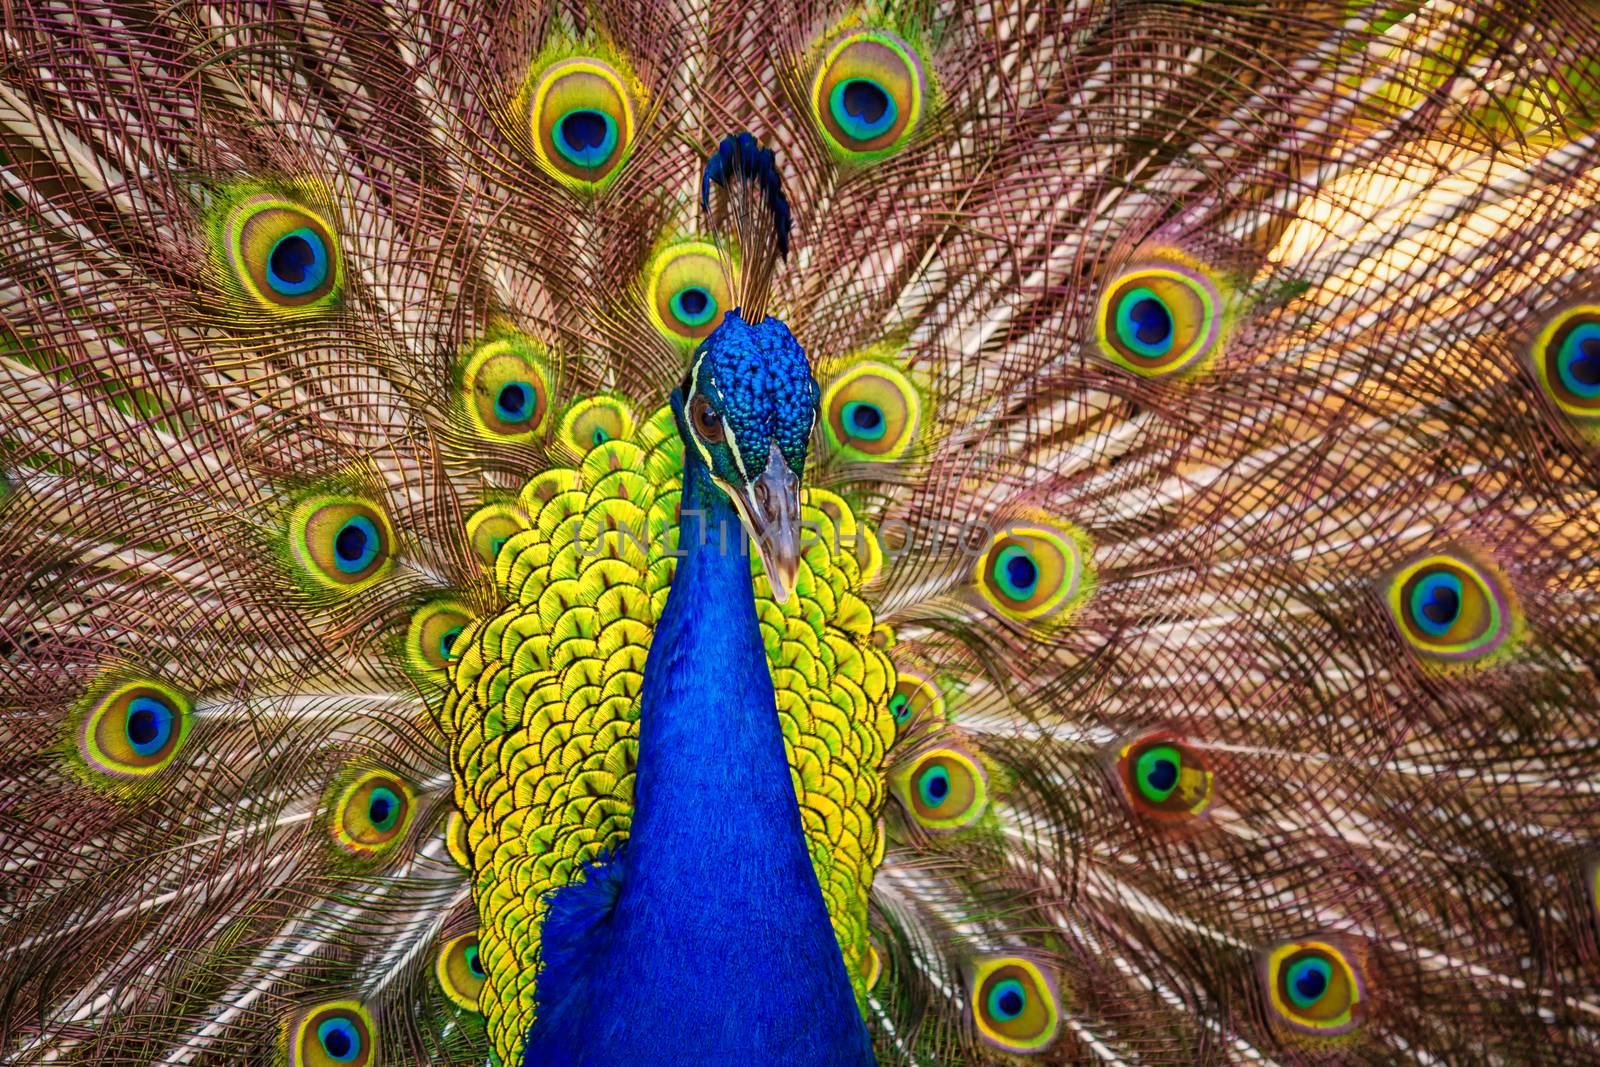 A Male Peacock Showing its Feathers, Kauaii, Hawaii by backyard_photography